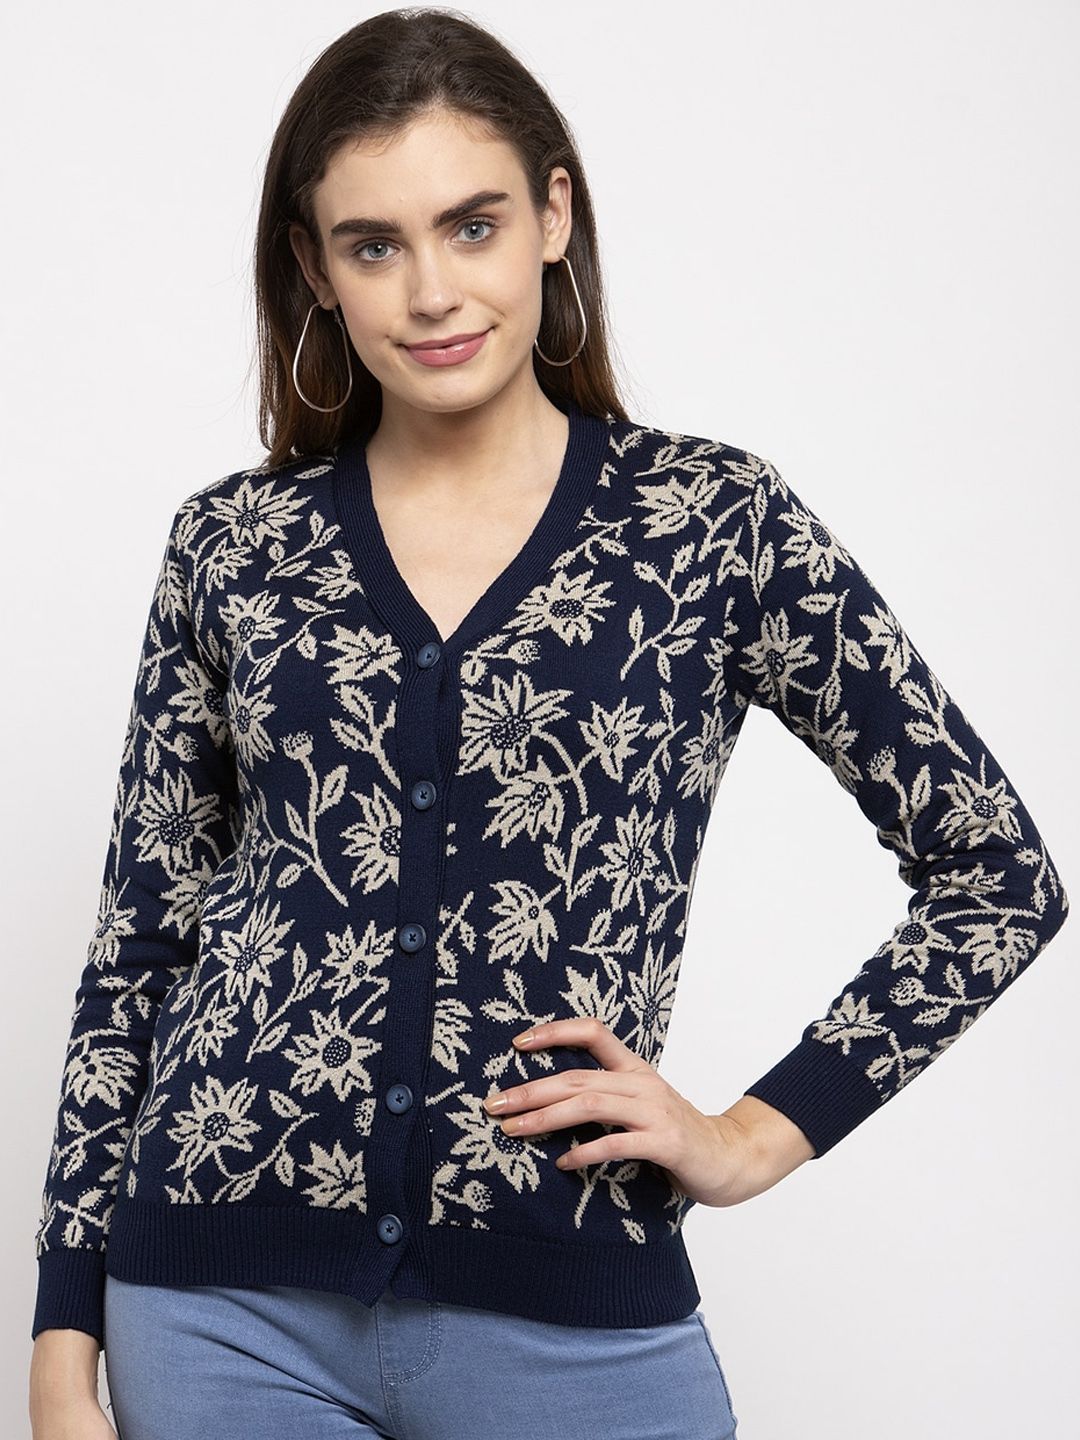 Kalt Women Navy Blue Floral Printed Cardigan Sweater Price in India